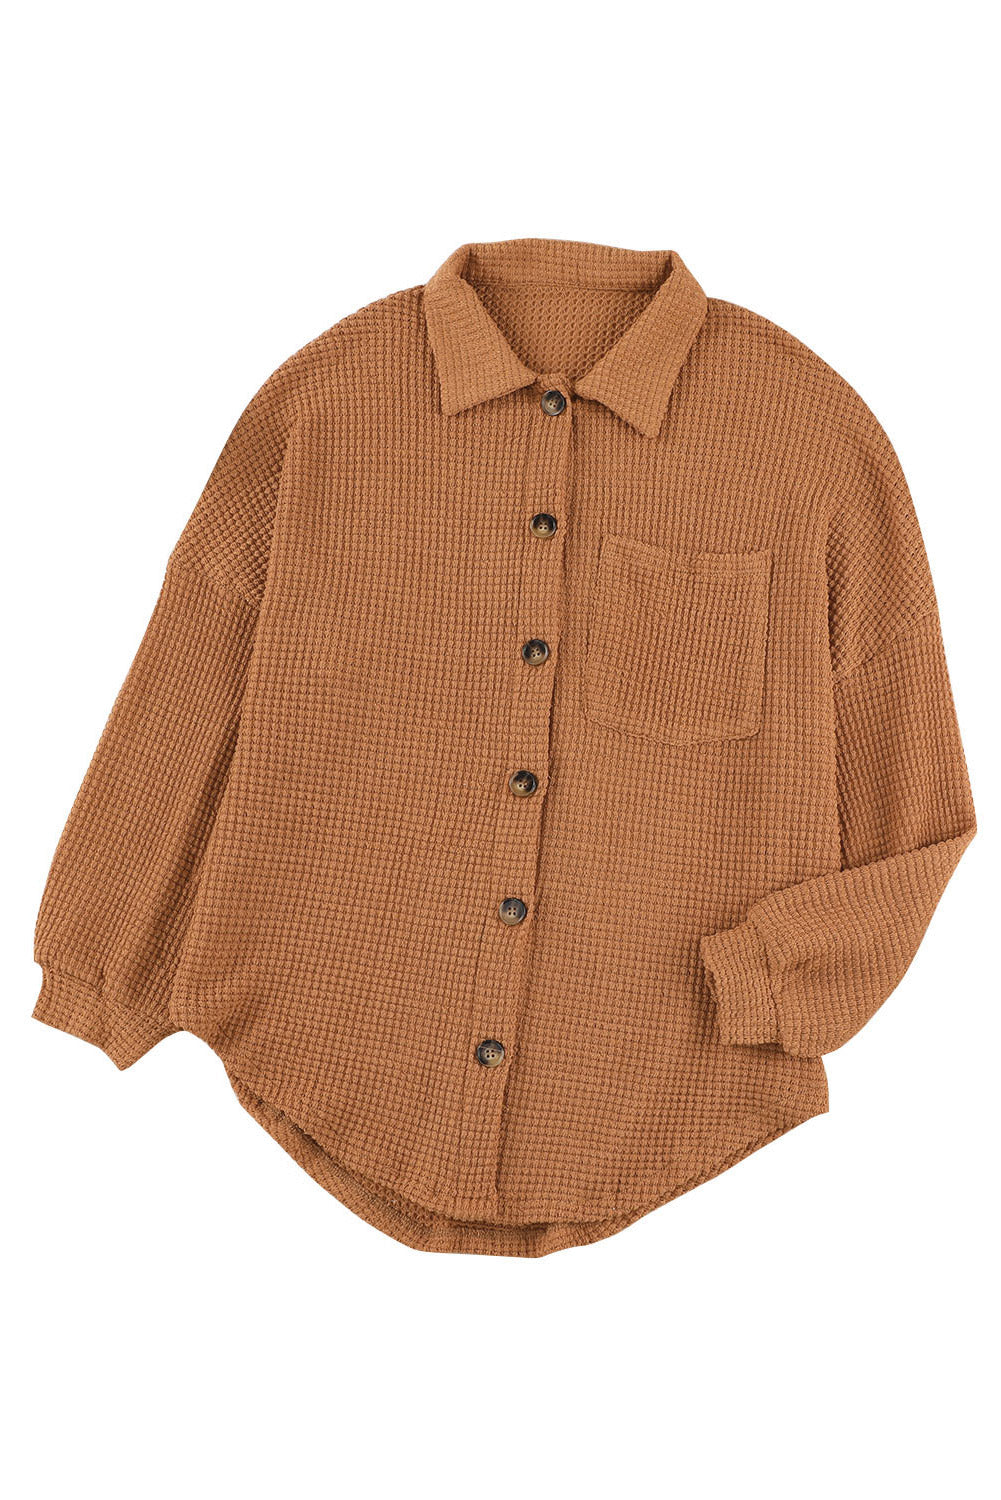 Waffle Knit Button Up Casual Shirt